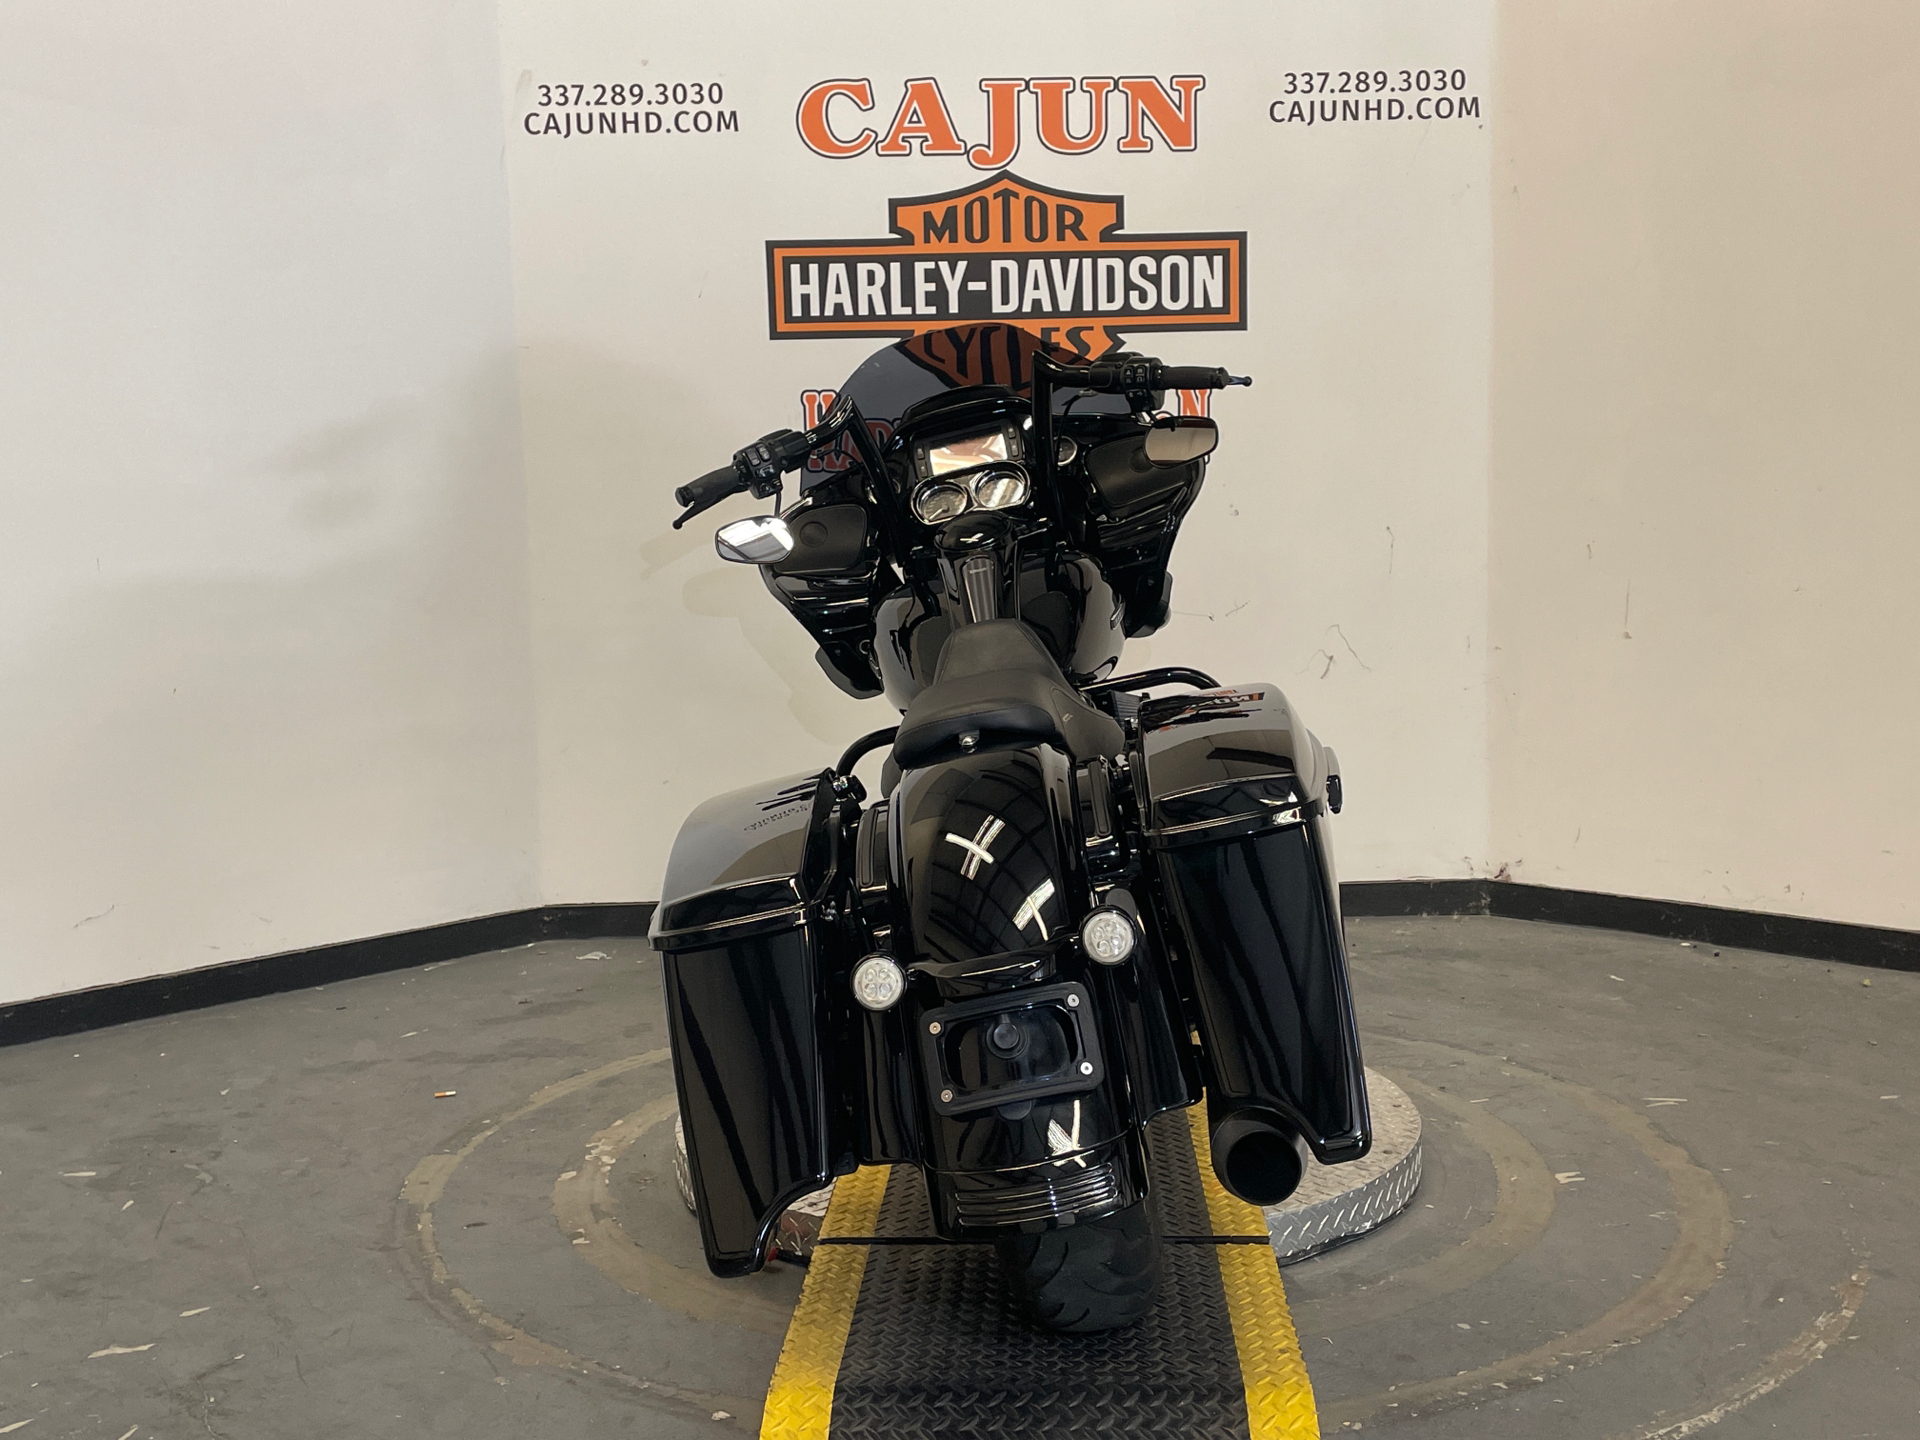 2018 Harley-Davidson Road Glide near me - Photo 8